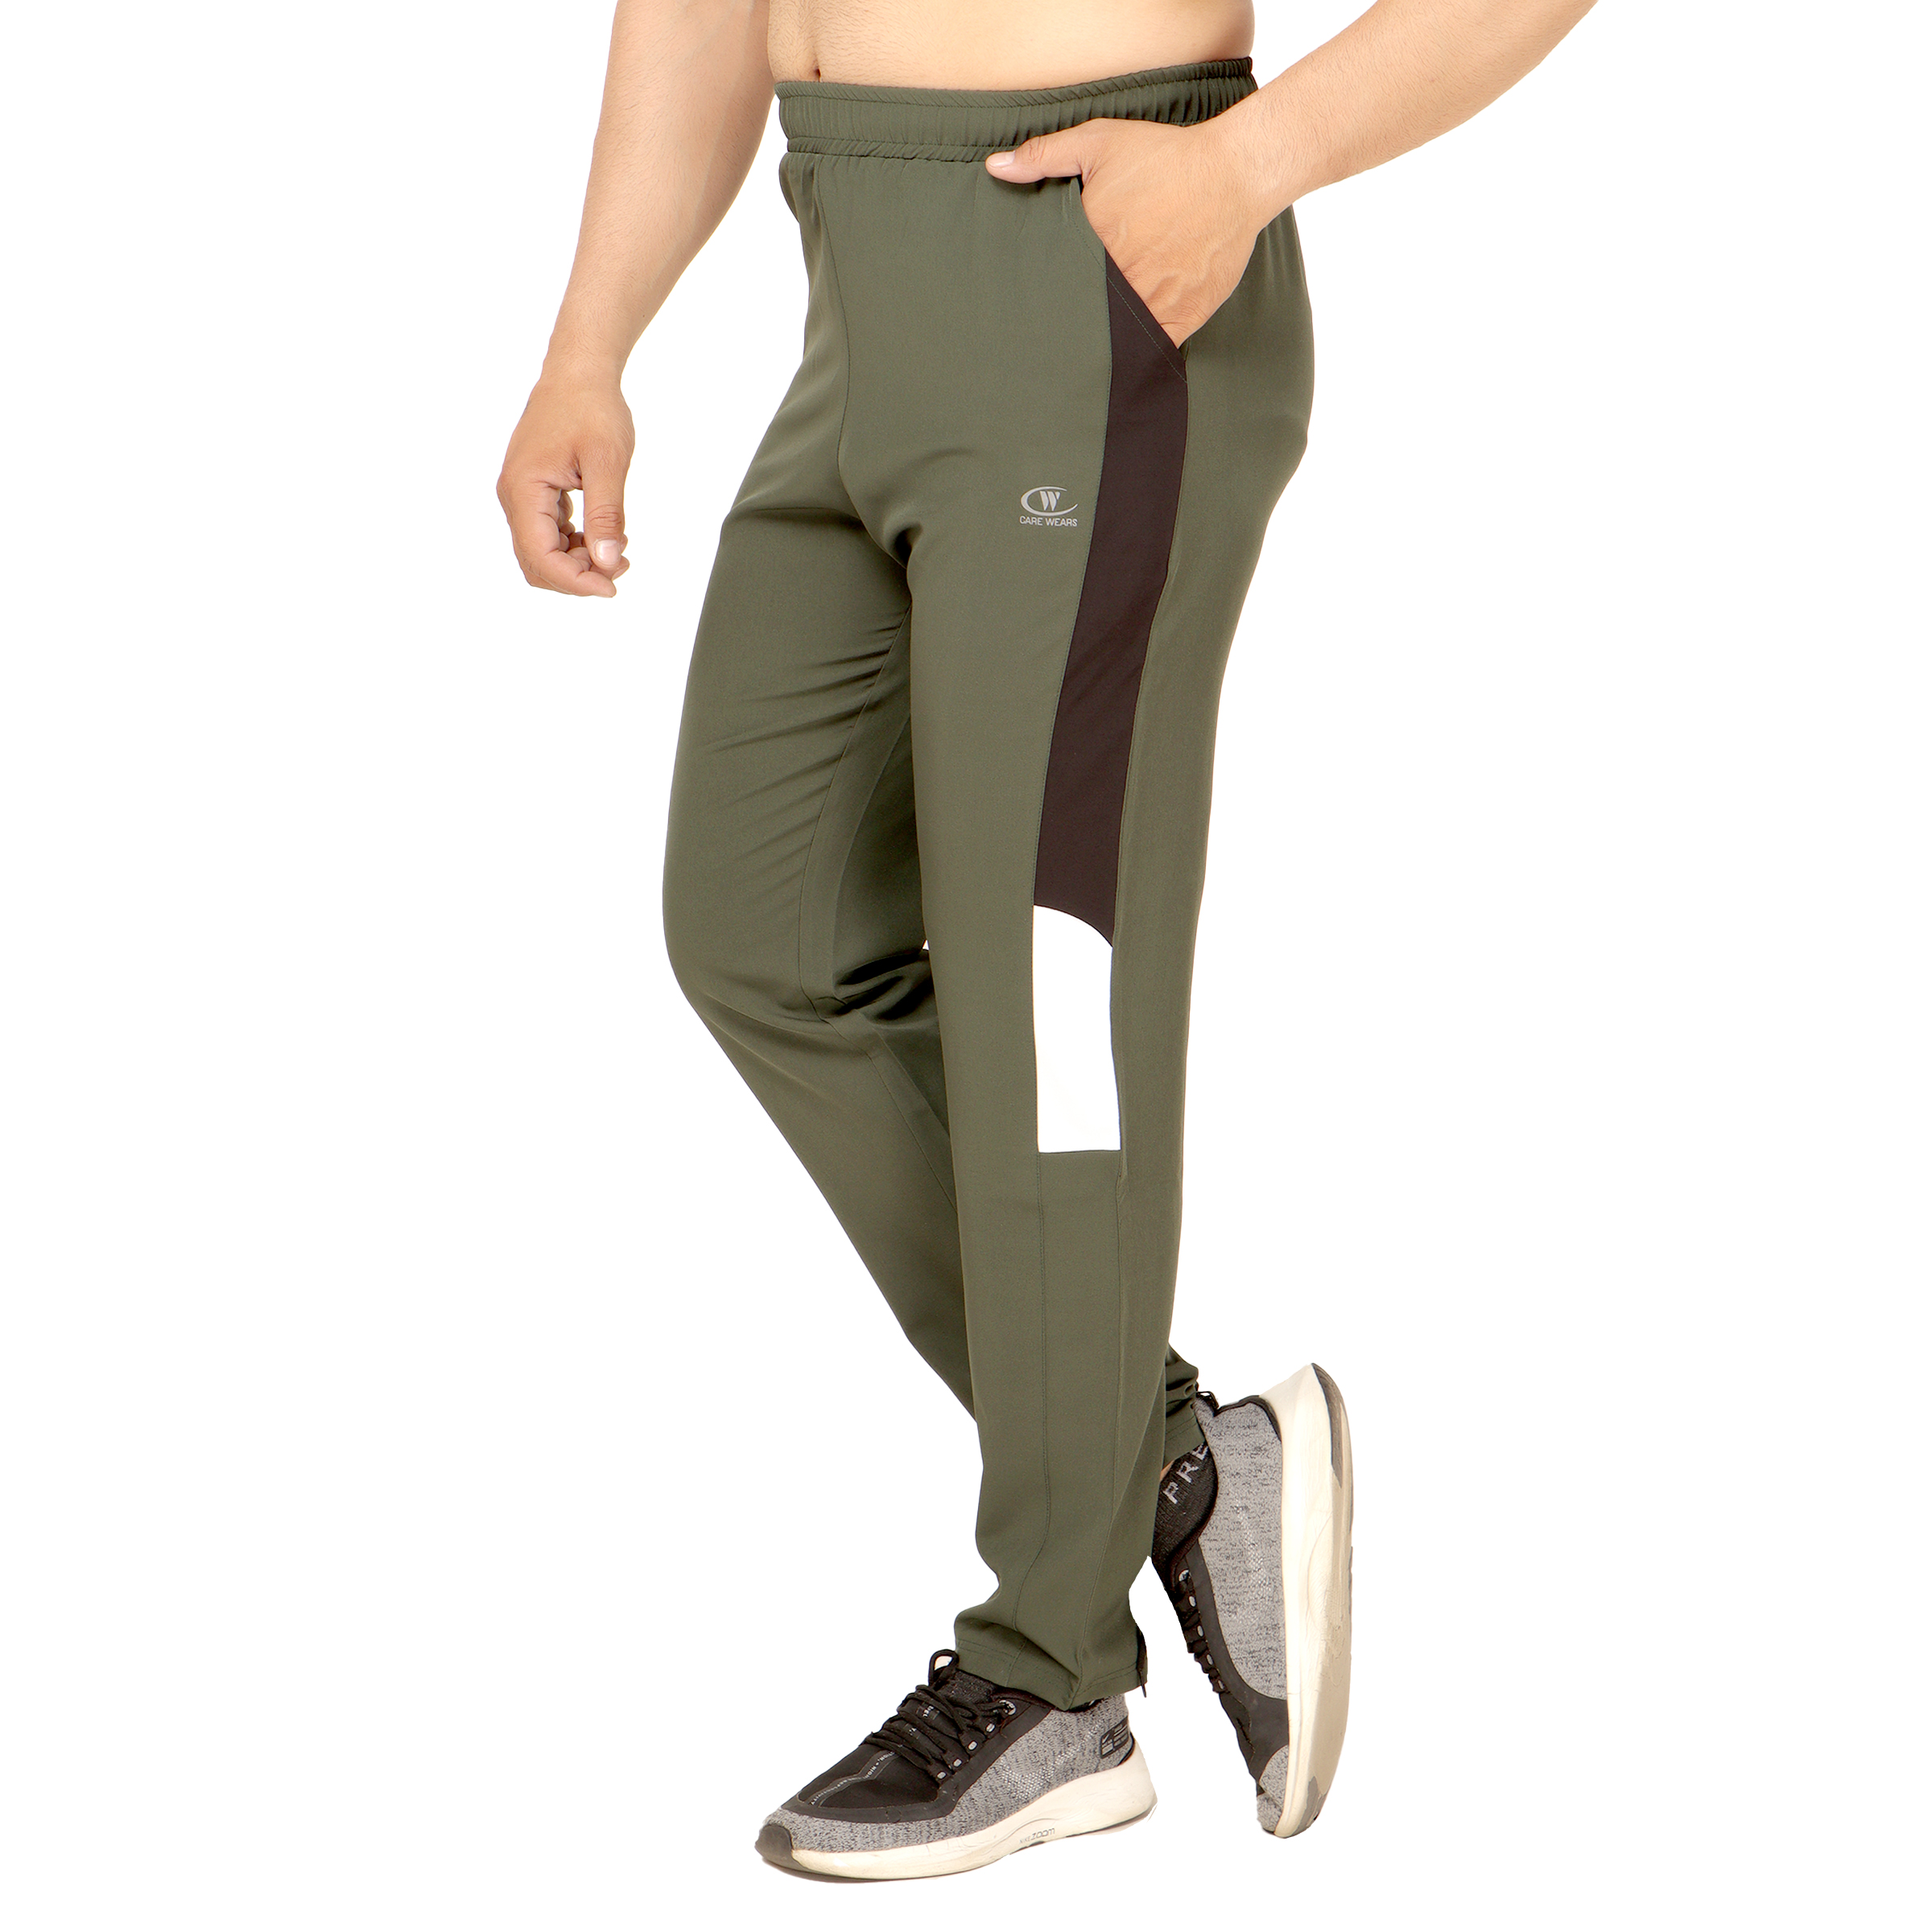 Green Cotton Spandex Regular Track Pants For Men